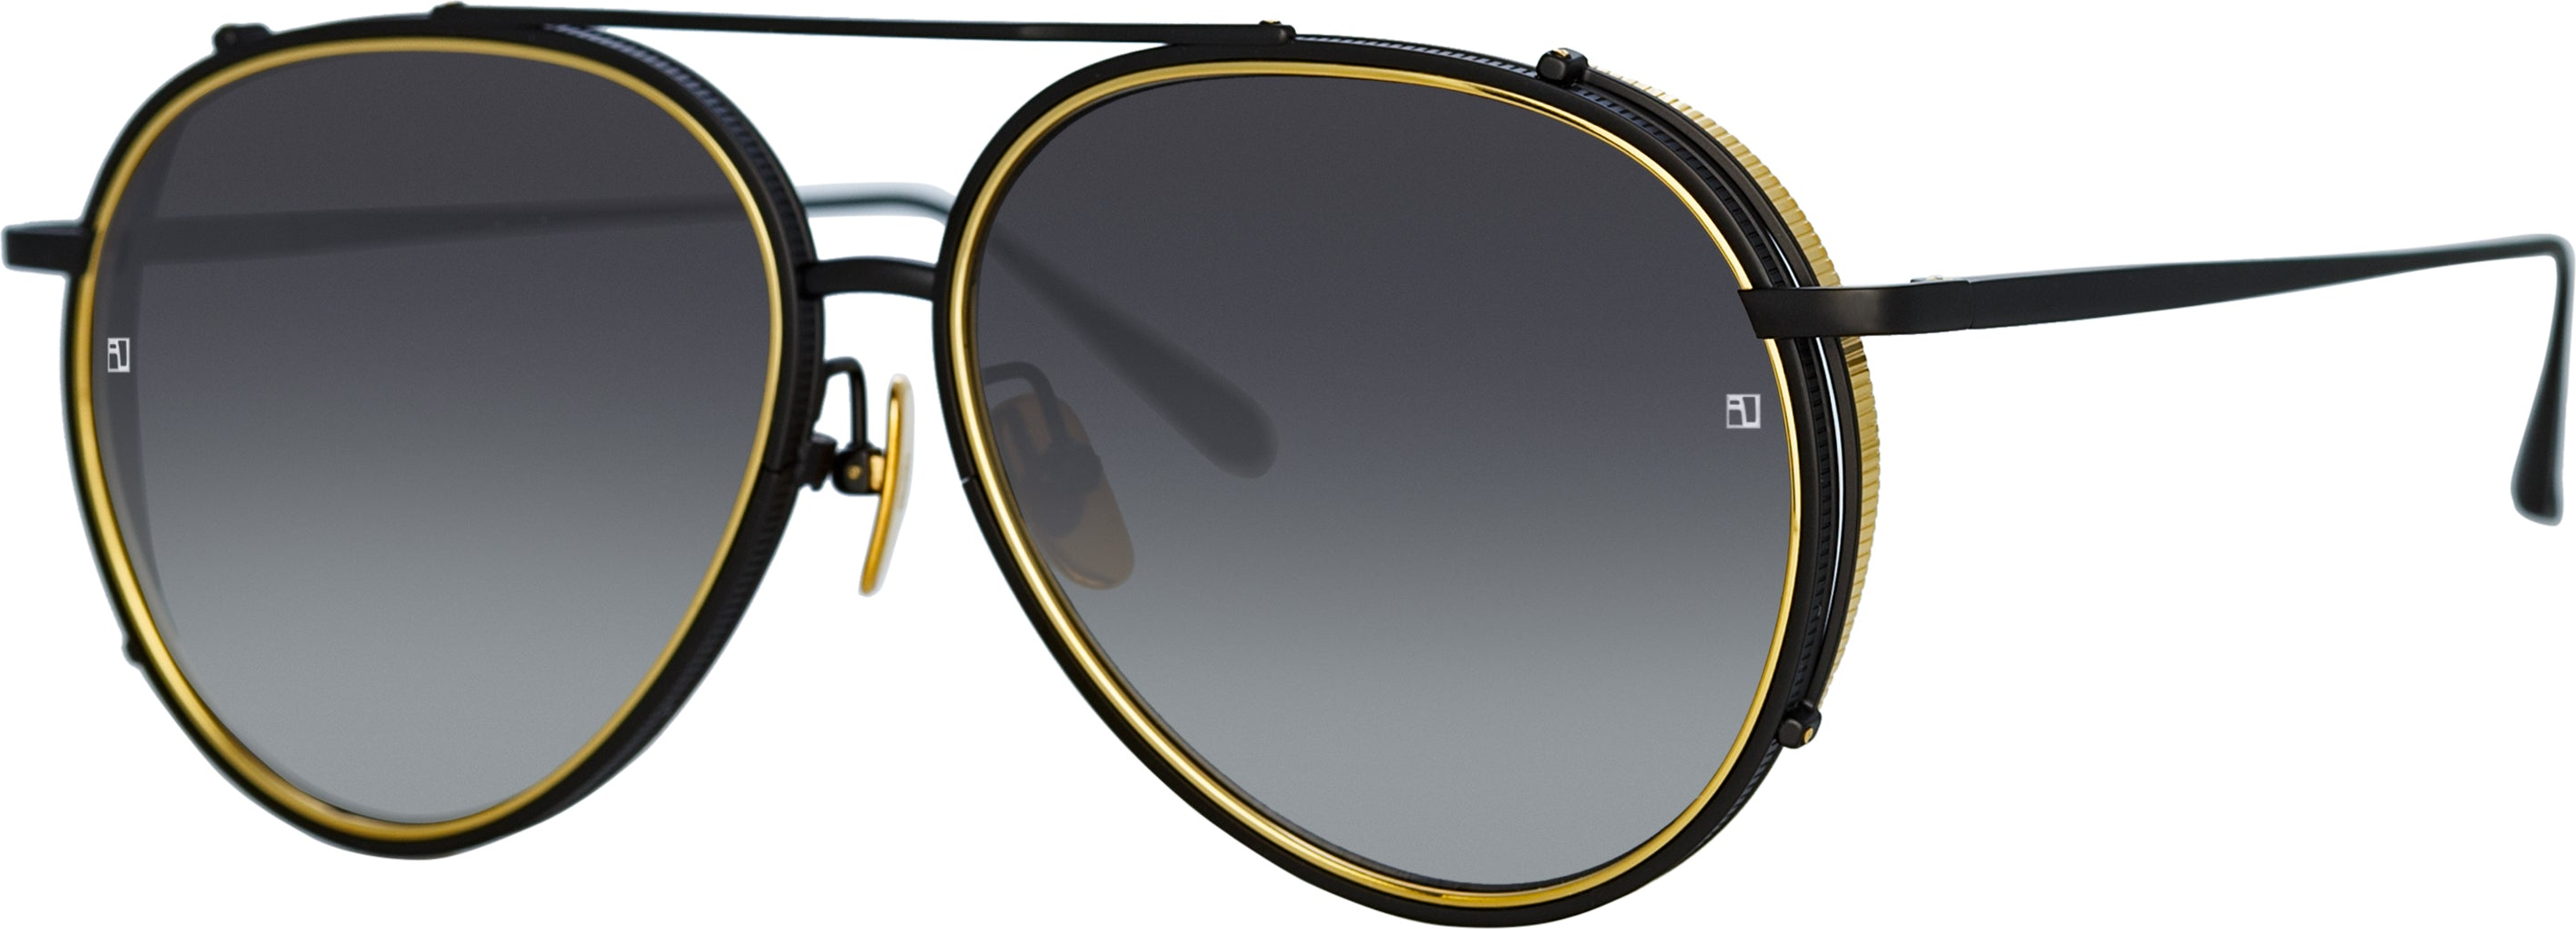 Color_LFL1360C1SUN - Torino Aviator Sunglasses in Nickel (Men's)